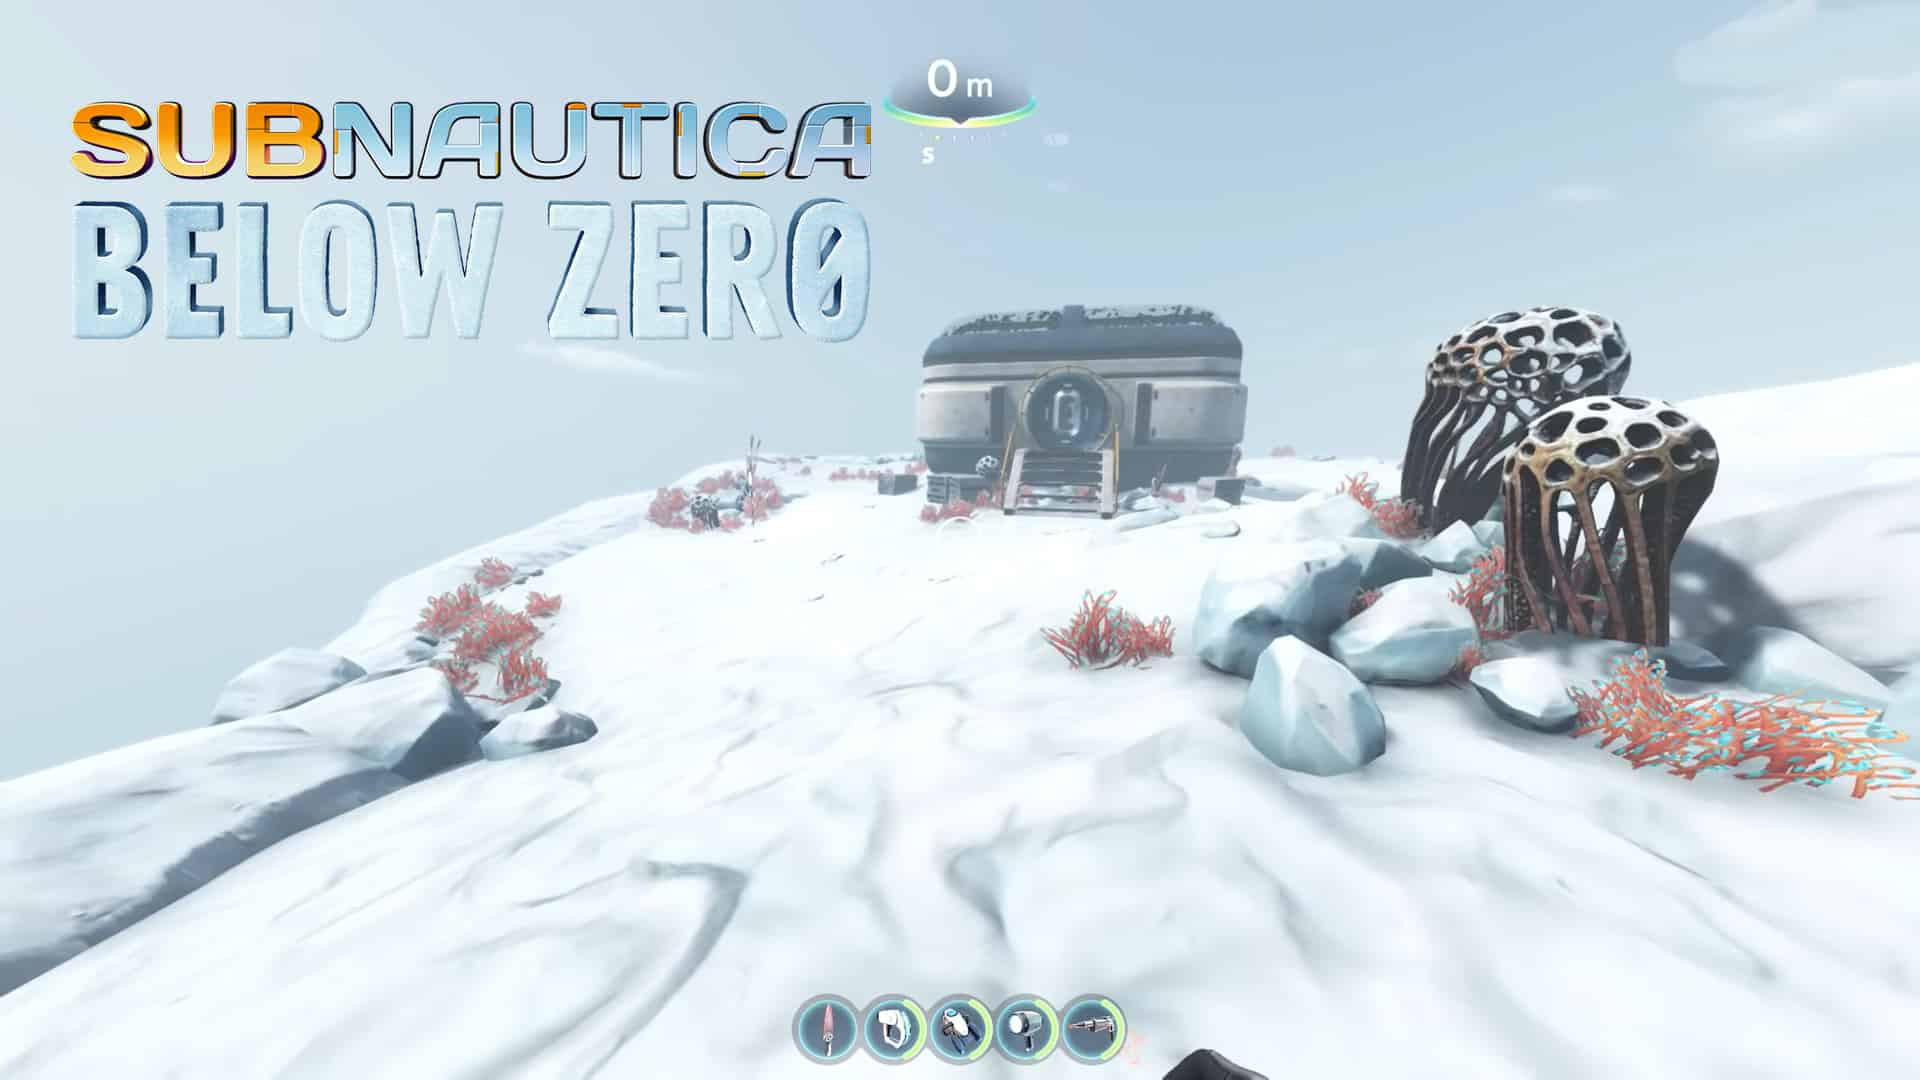 subnautica below zero map location